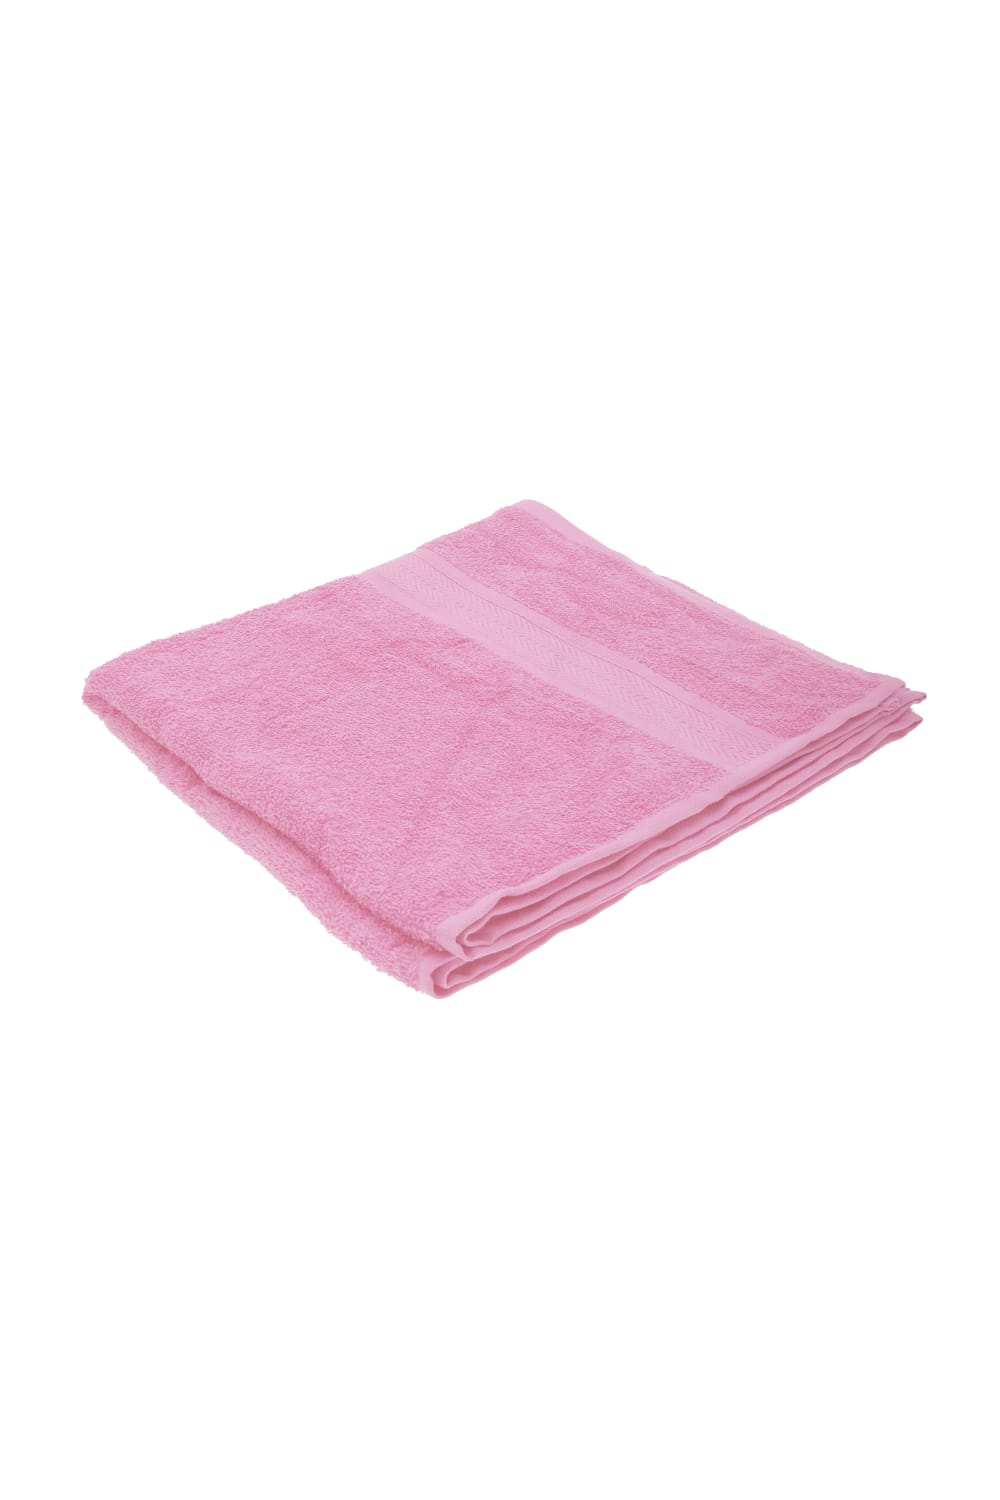 Jassz Plain Bath Towel (Pink) (One Size)